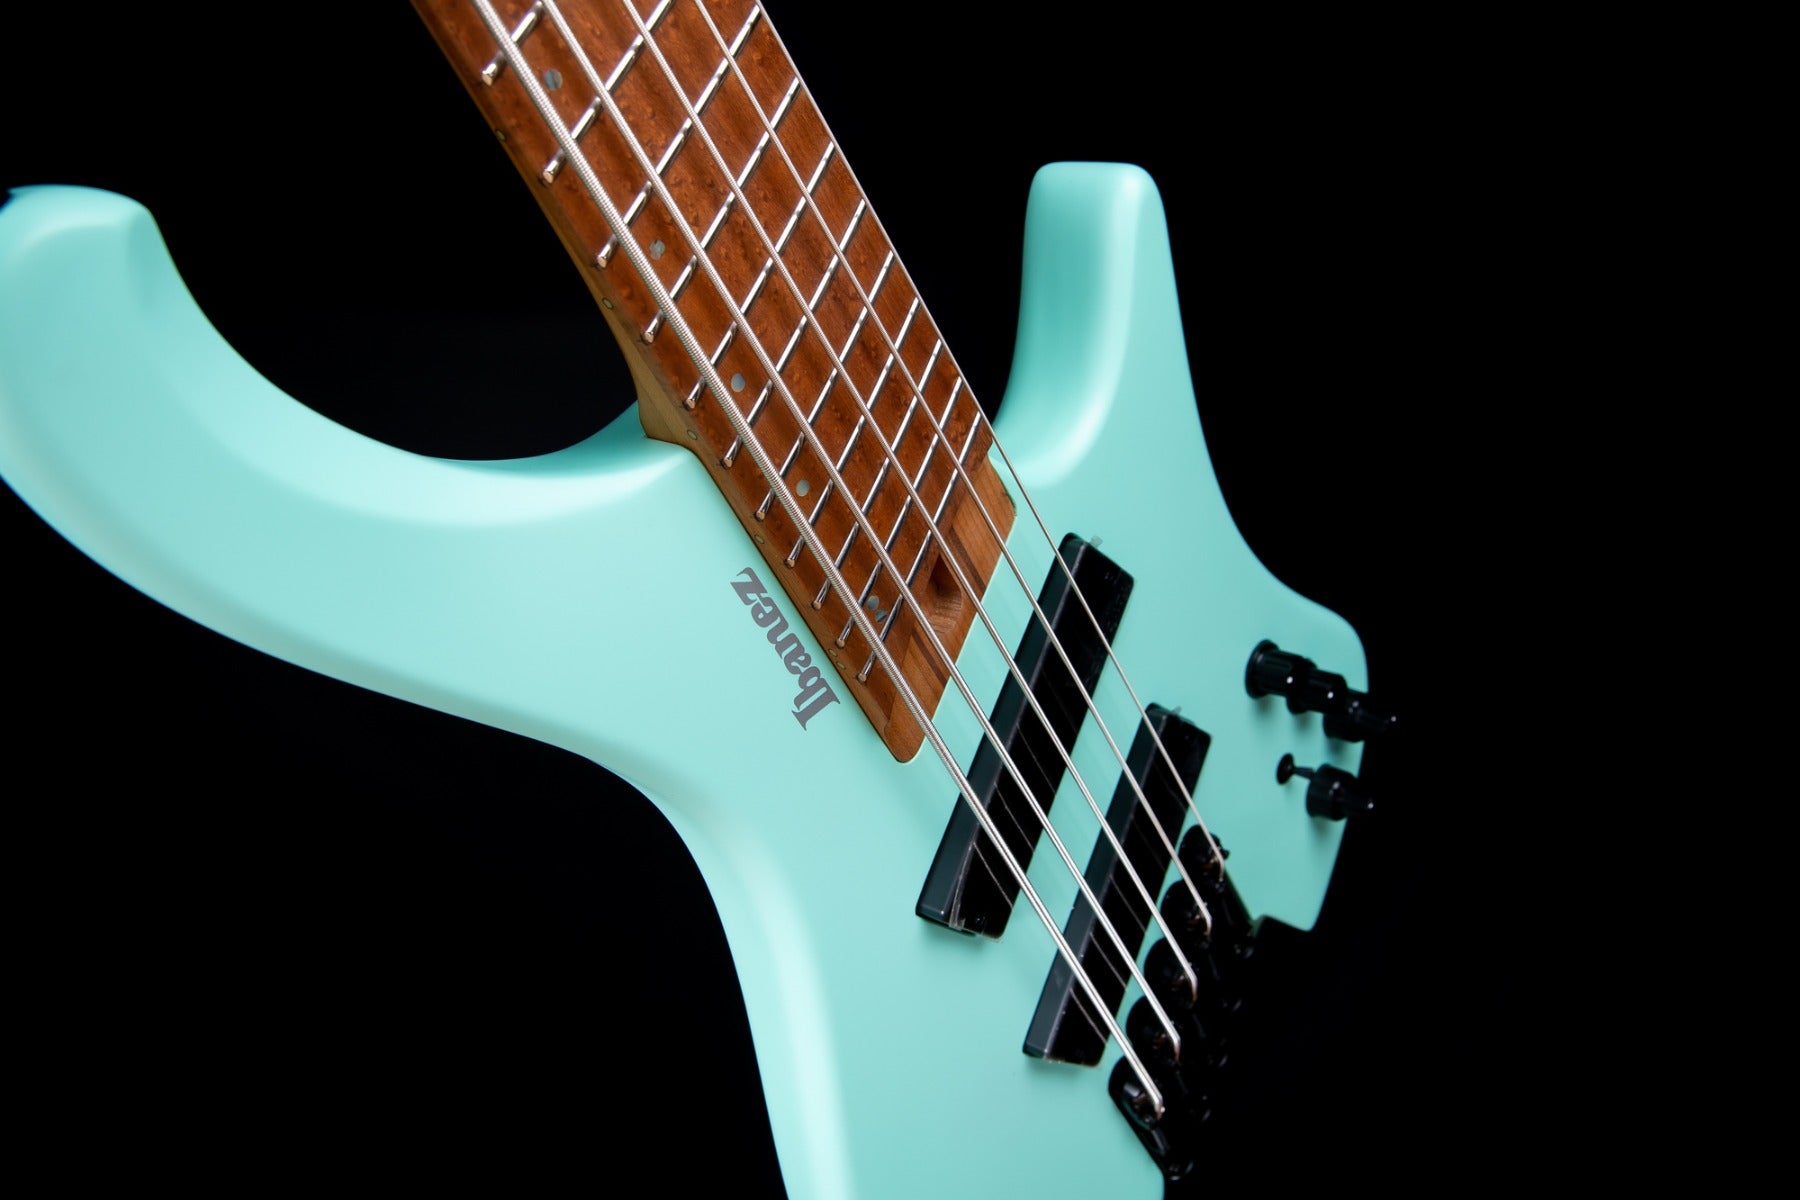 Ibanez EHB1005MS Ergonomic Headless 5-String Bass Guitar - Sea Foam Green Matte view 5